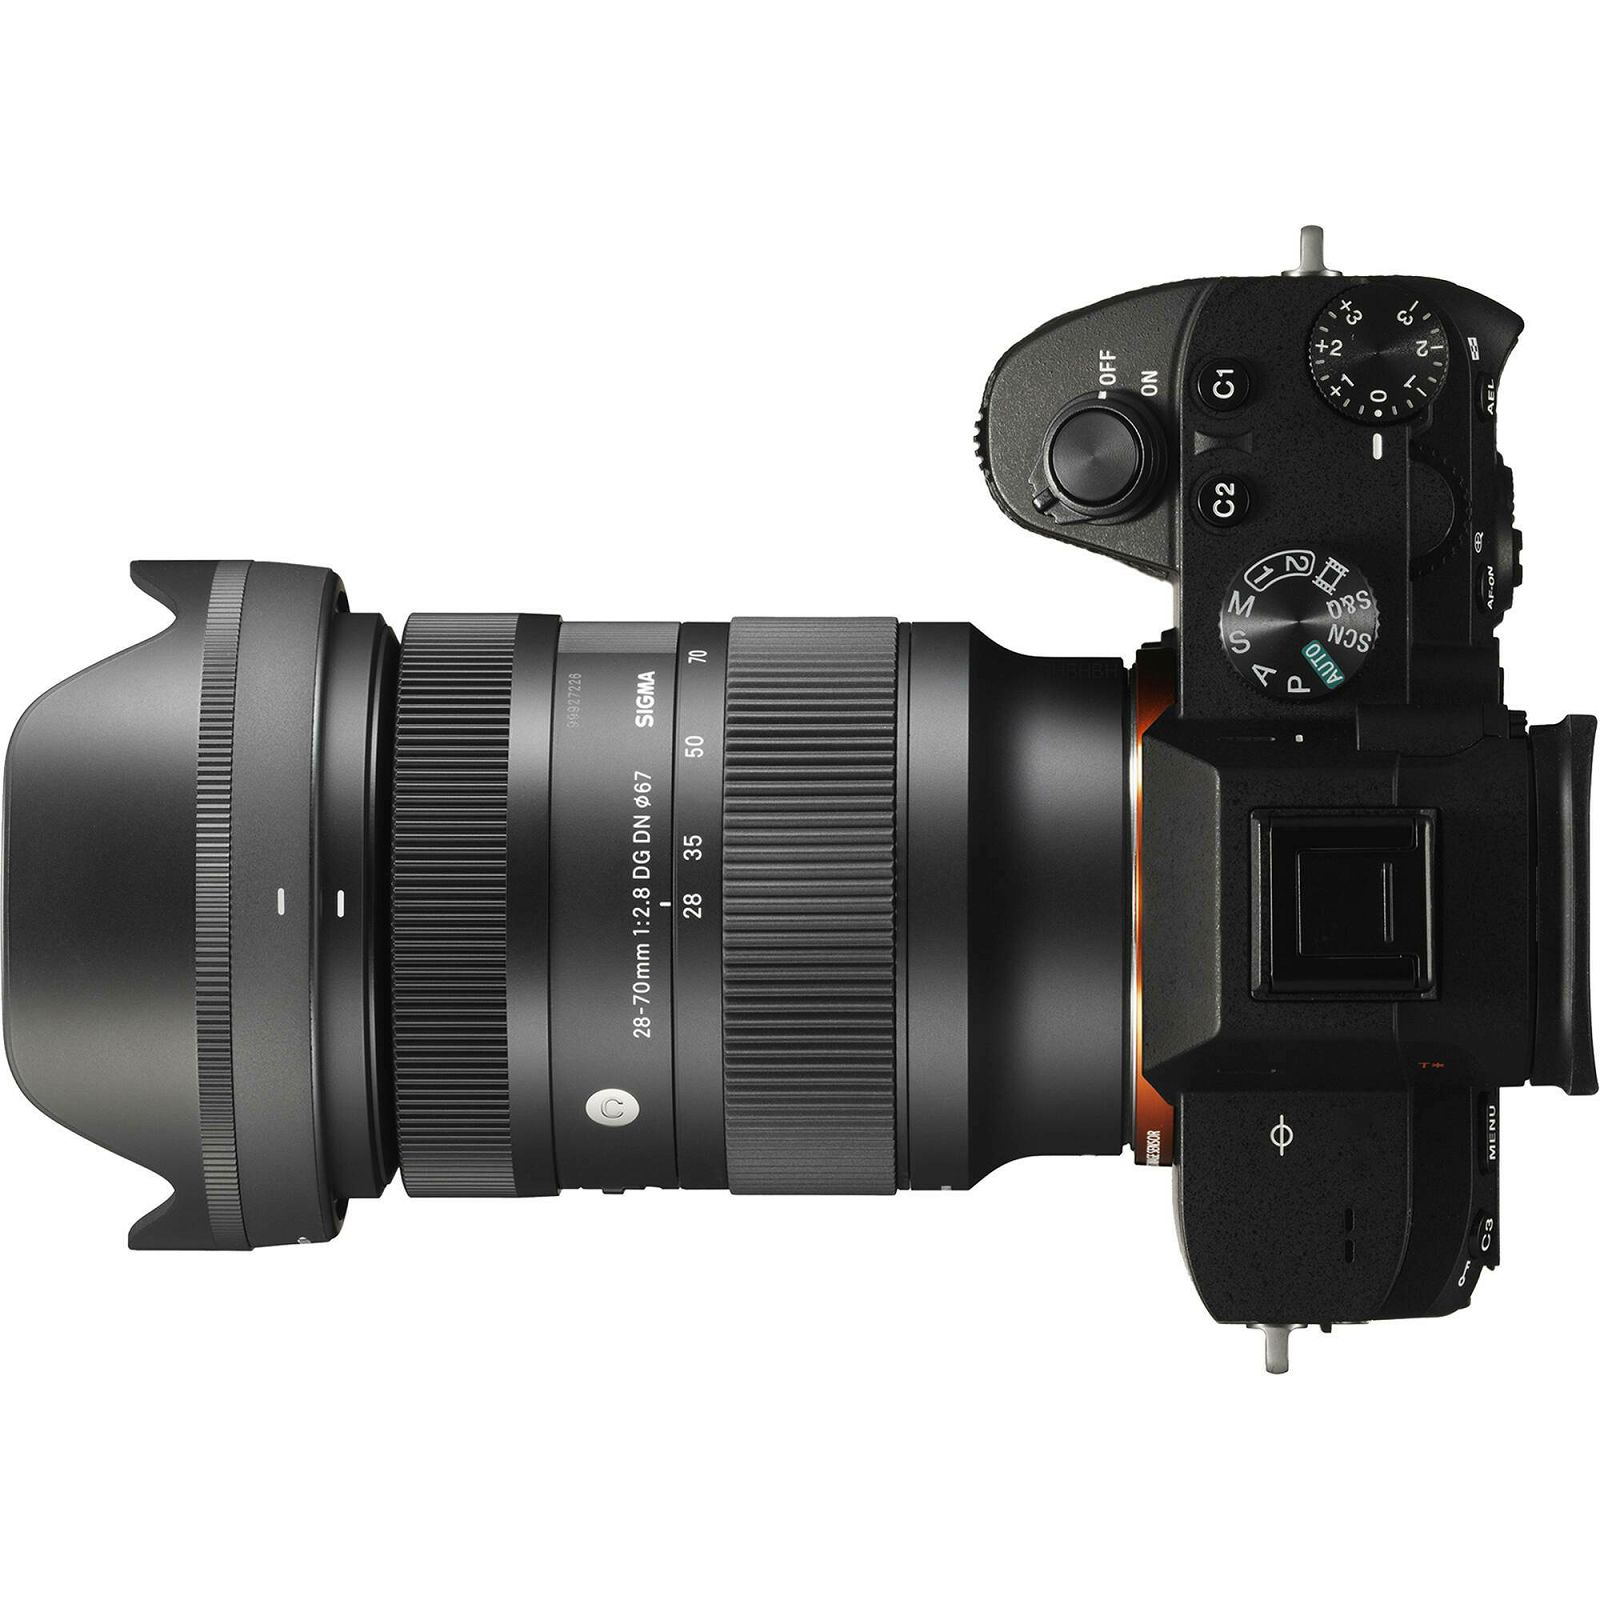 Sigma AF 28-70mm F/2.8 DG DN (C) standardni zoom objektiv za Sony E-mount